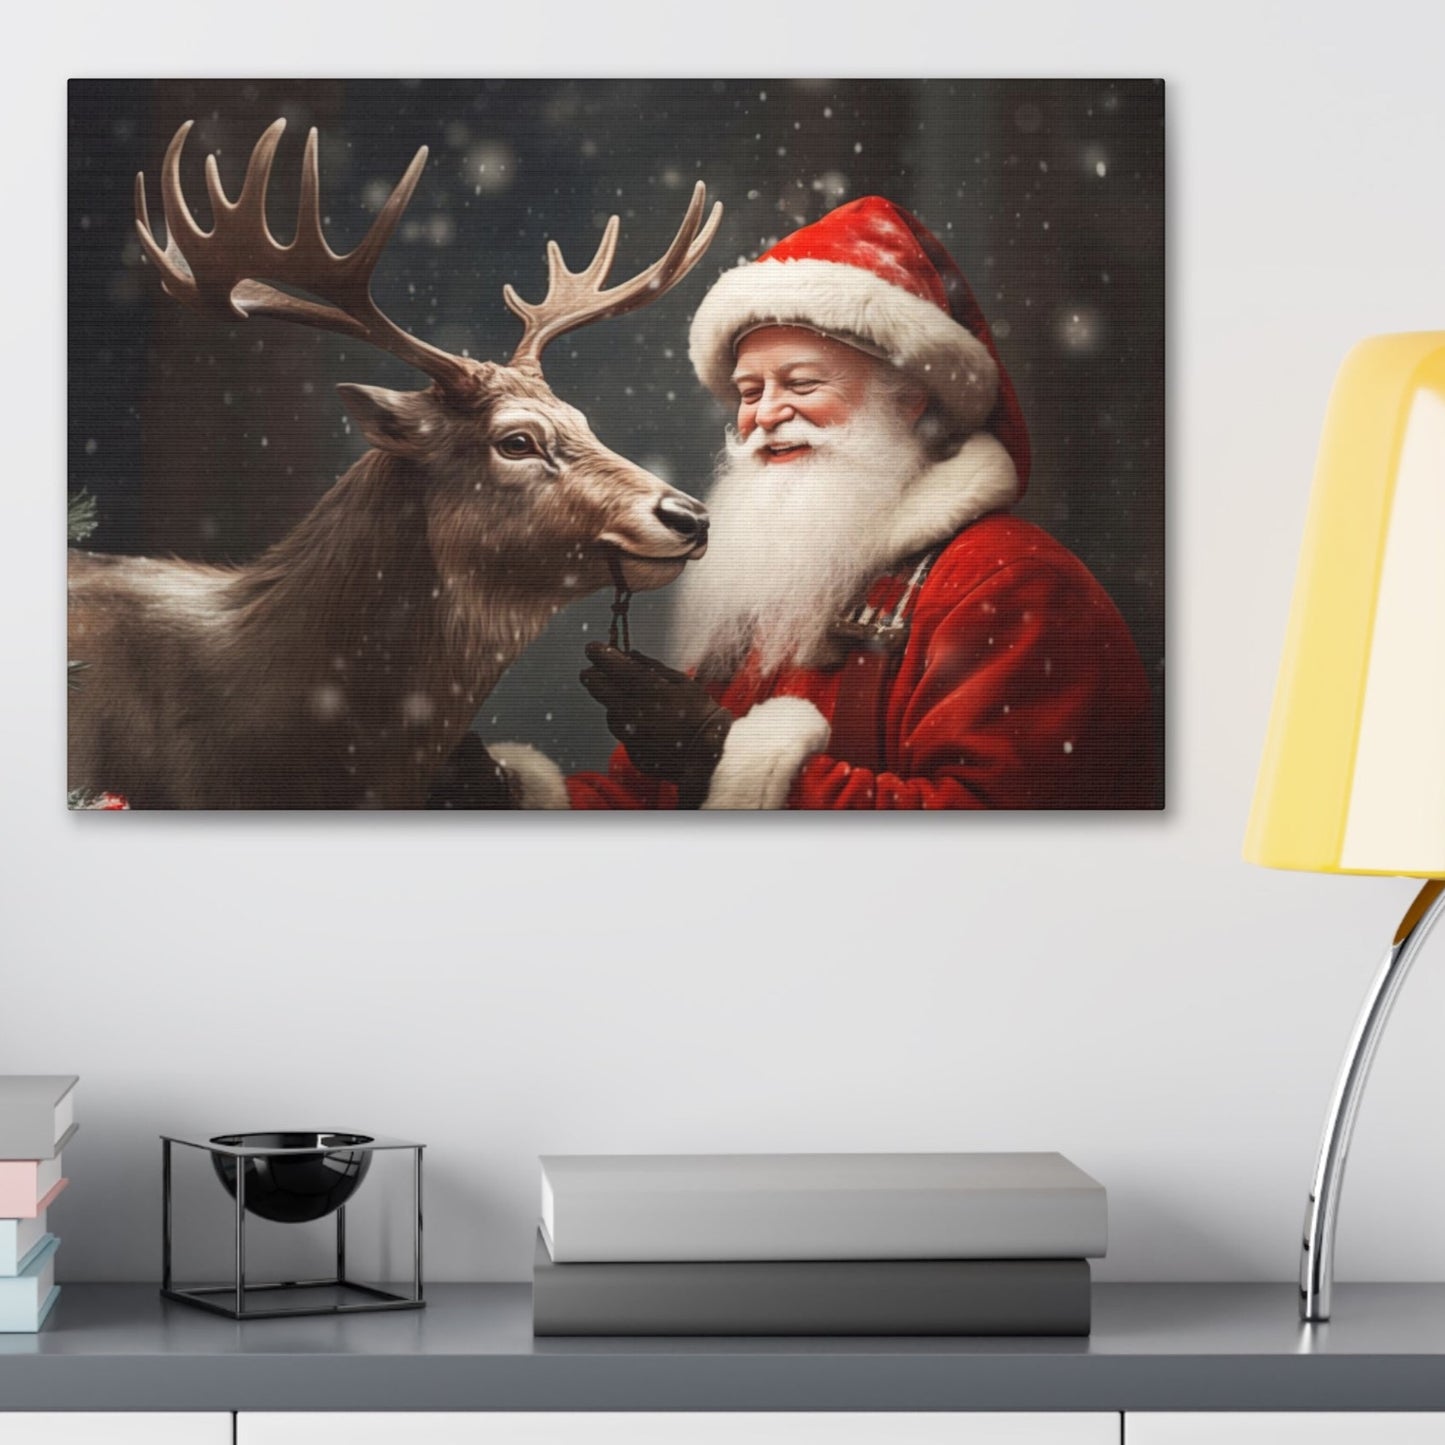 Santa and reindeer art decor